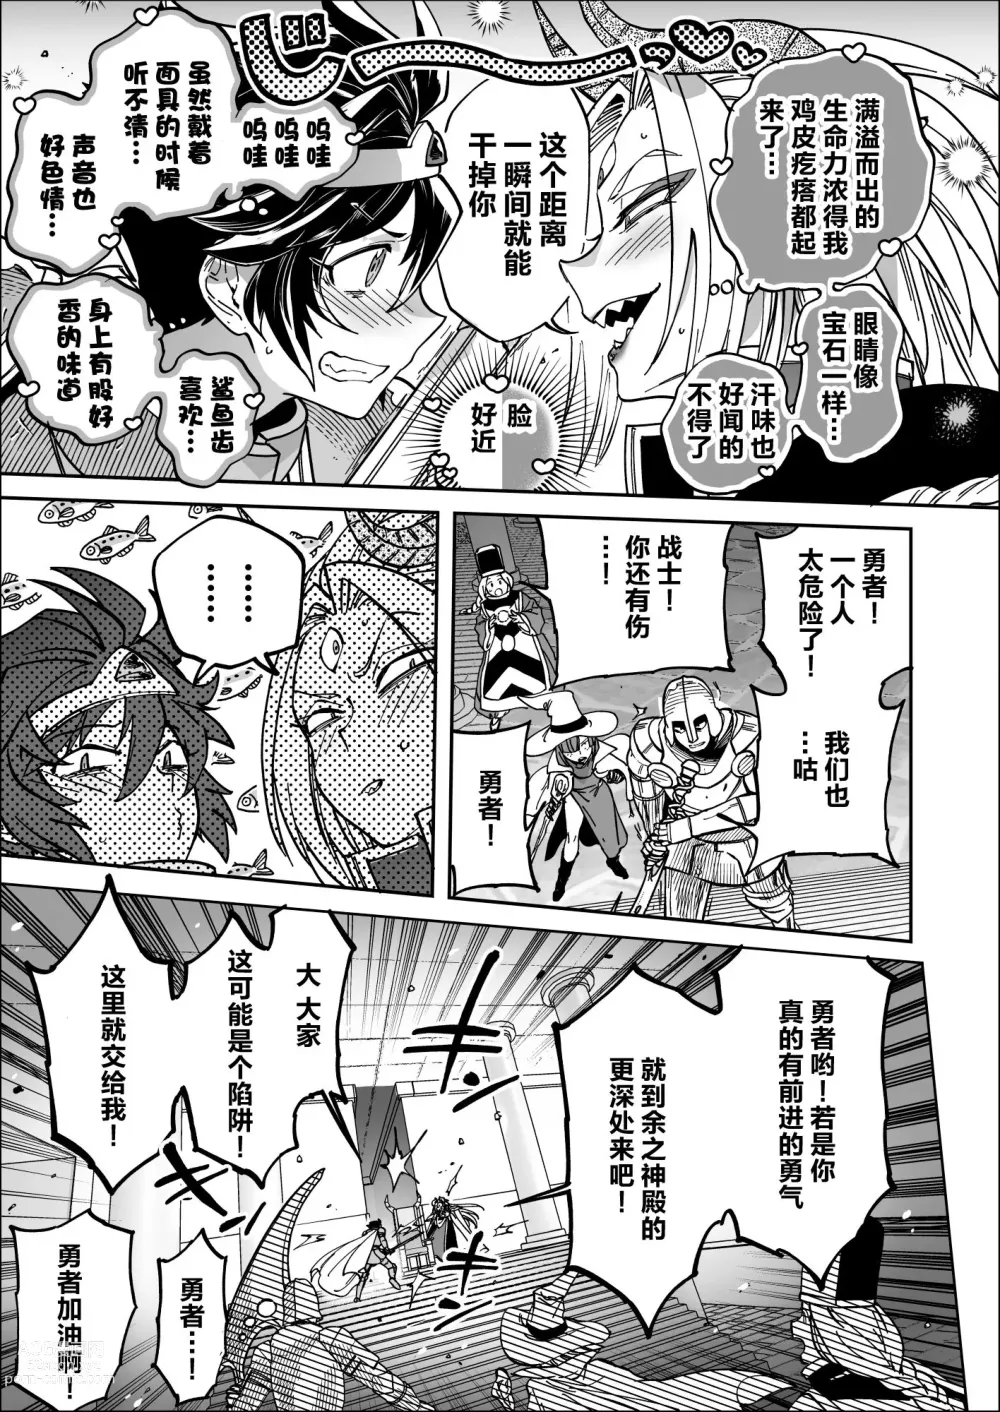 Page 5 of doujinshi 最终决战才见到对方正脸就恍神的勇者与魔王